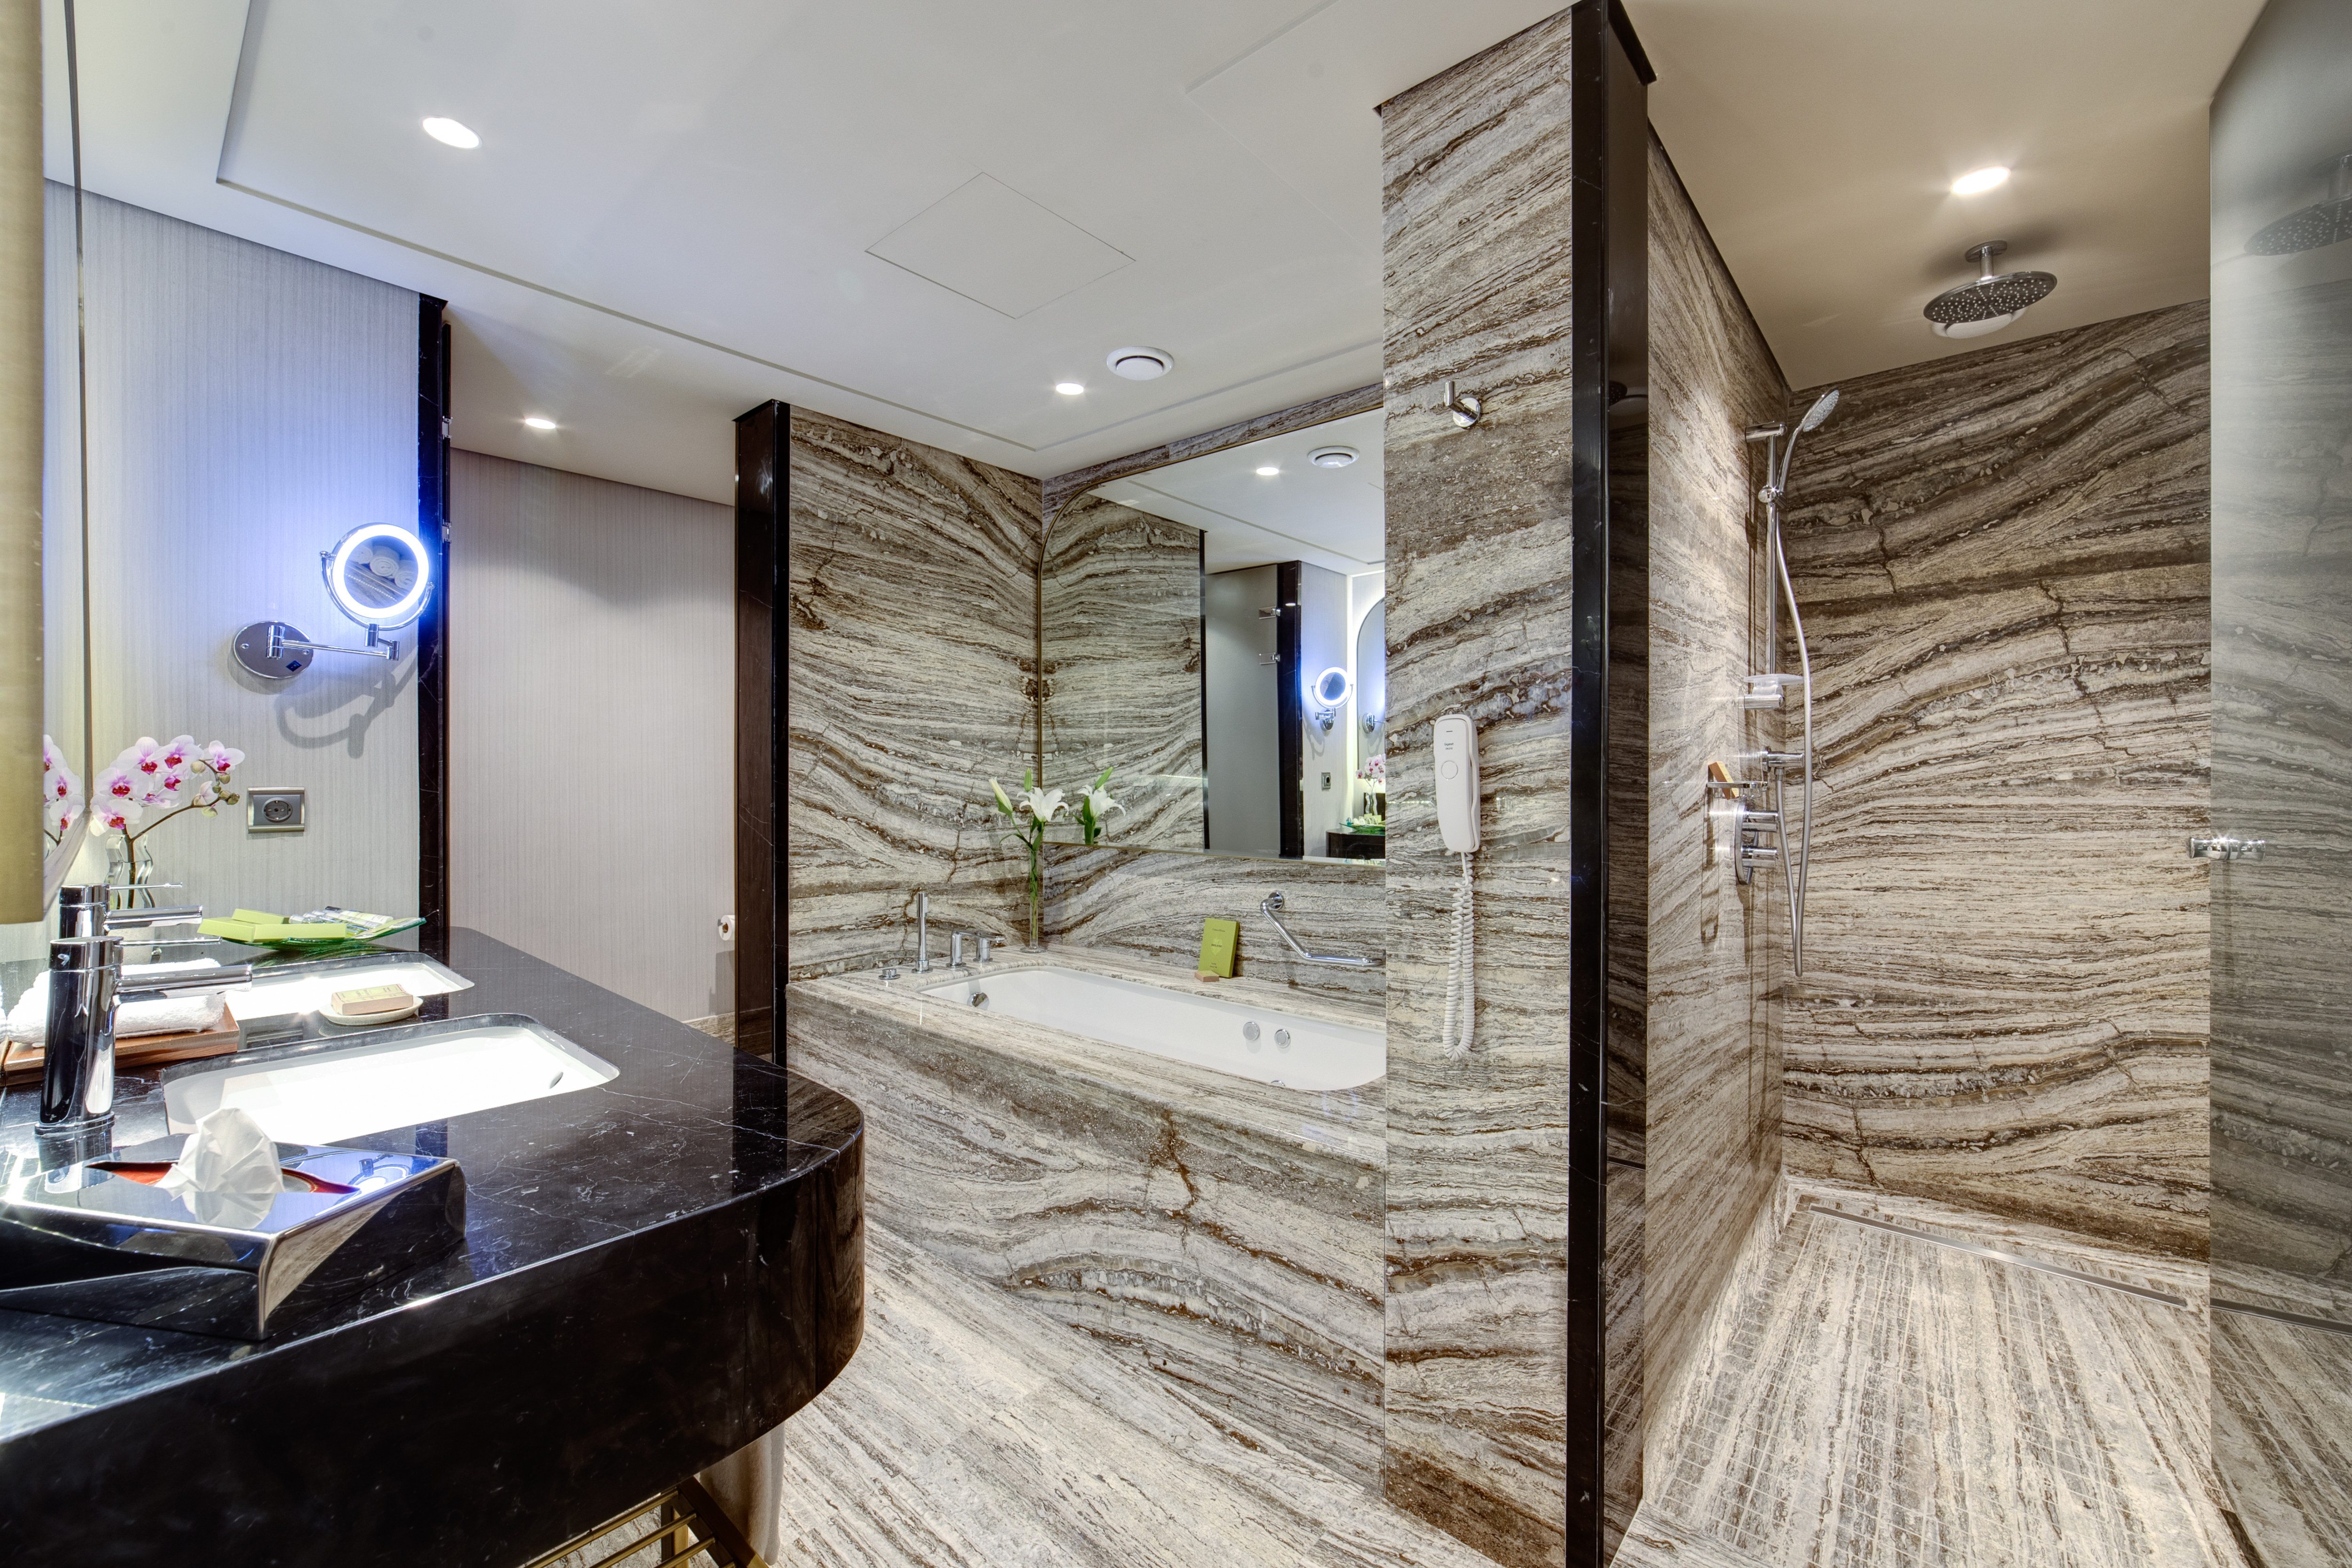 Adana HiltonSA Presidential Suite Bathroom